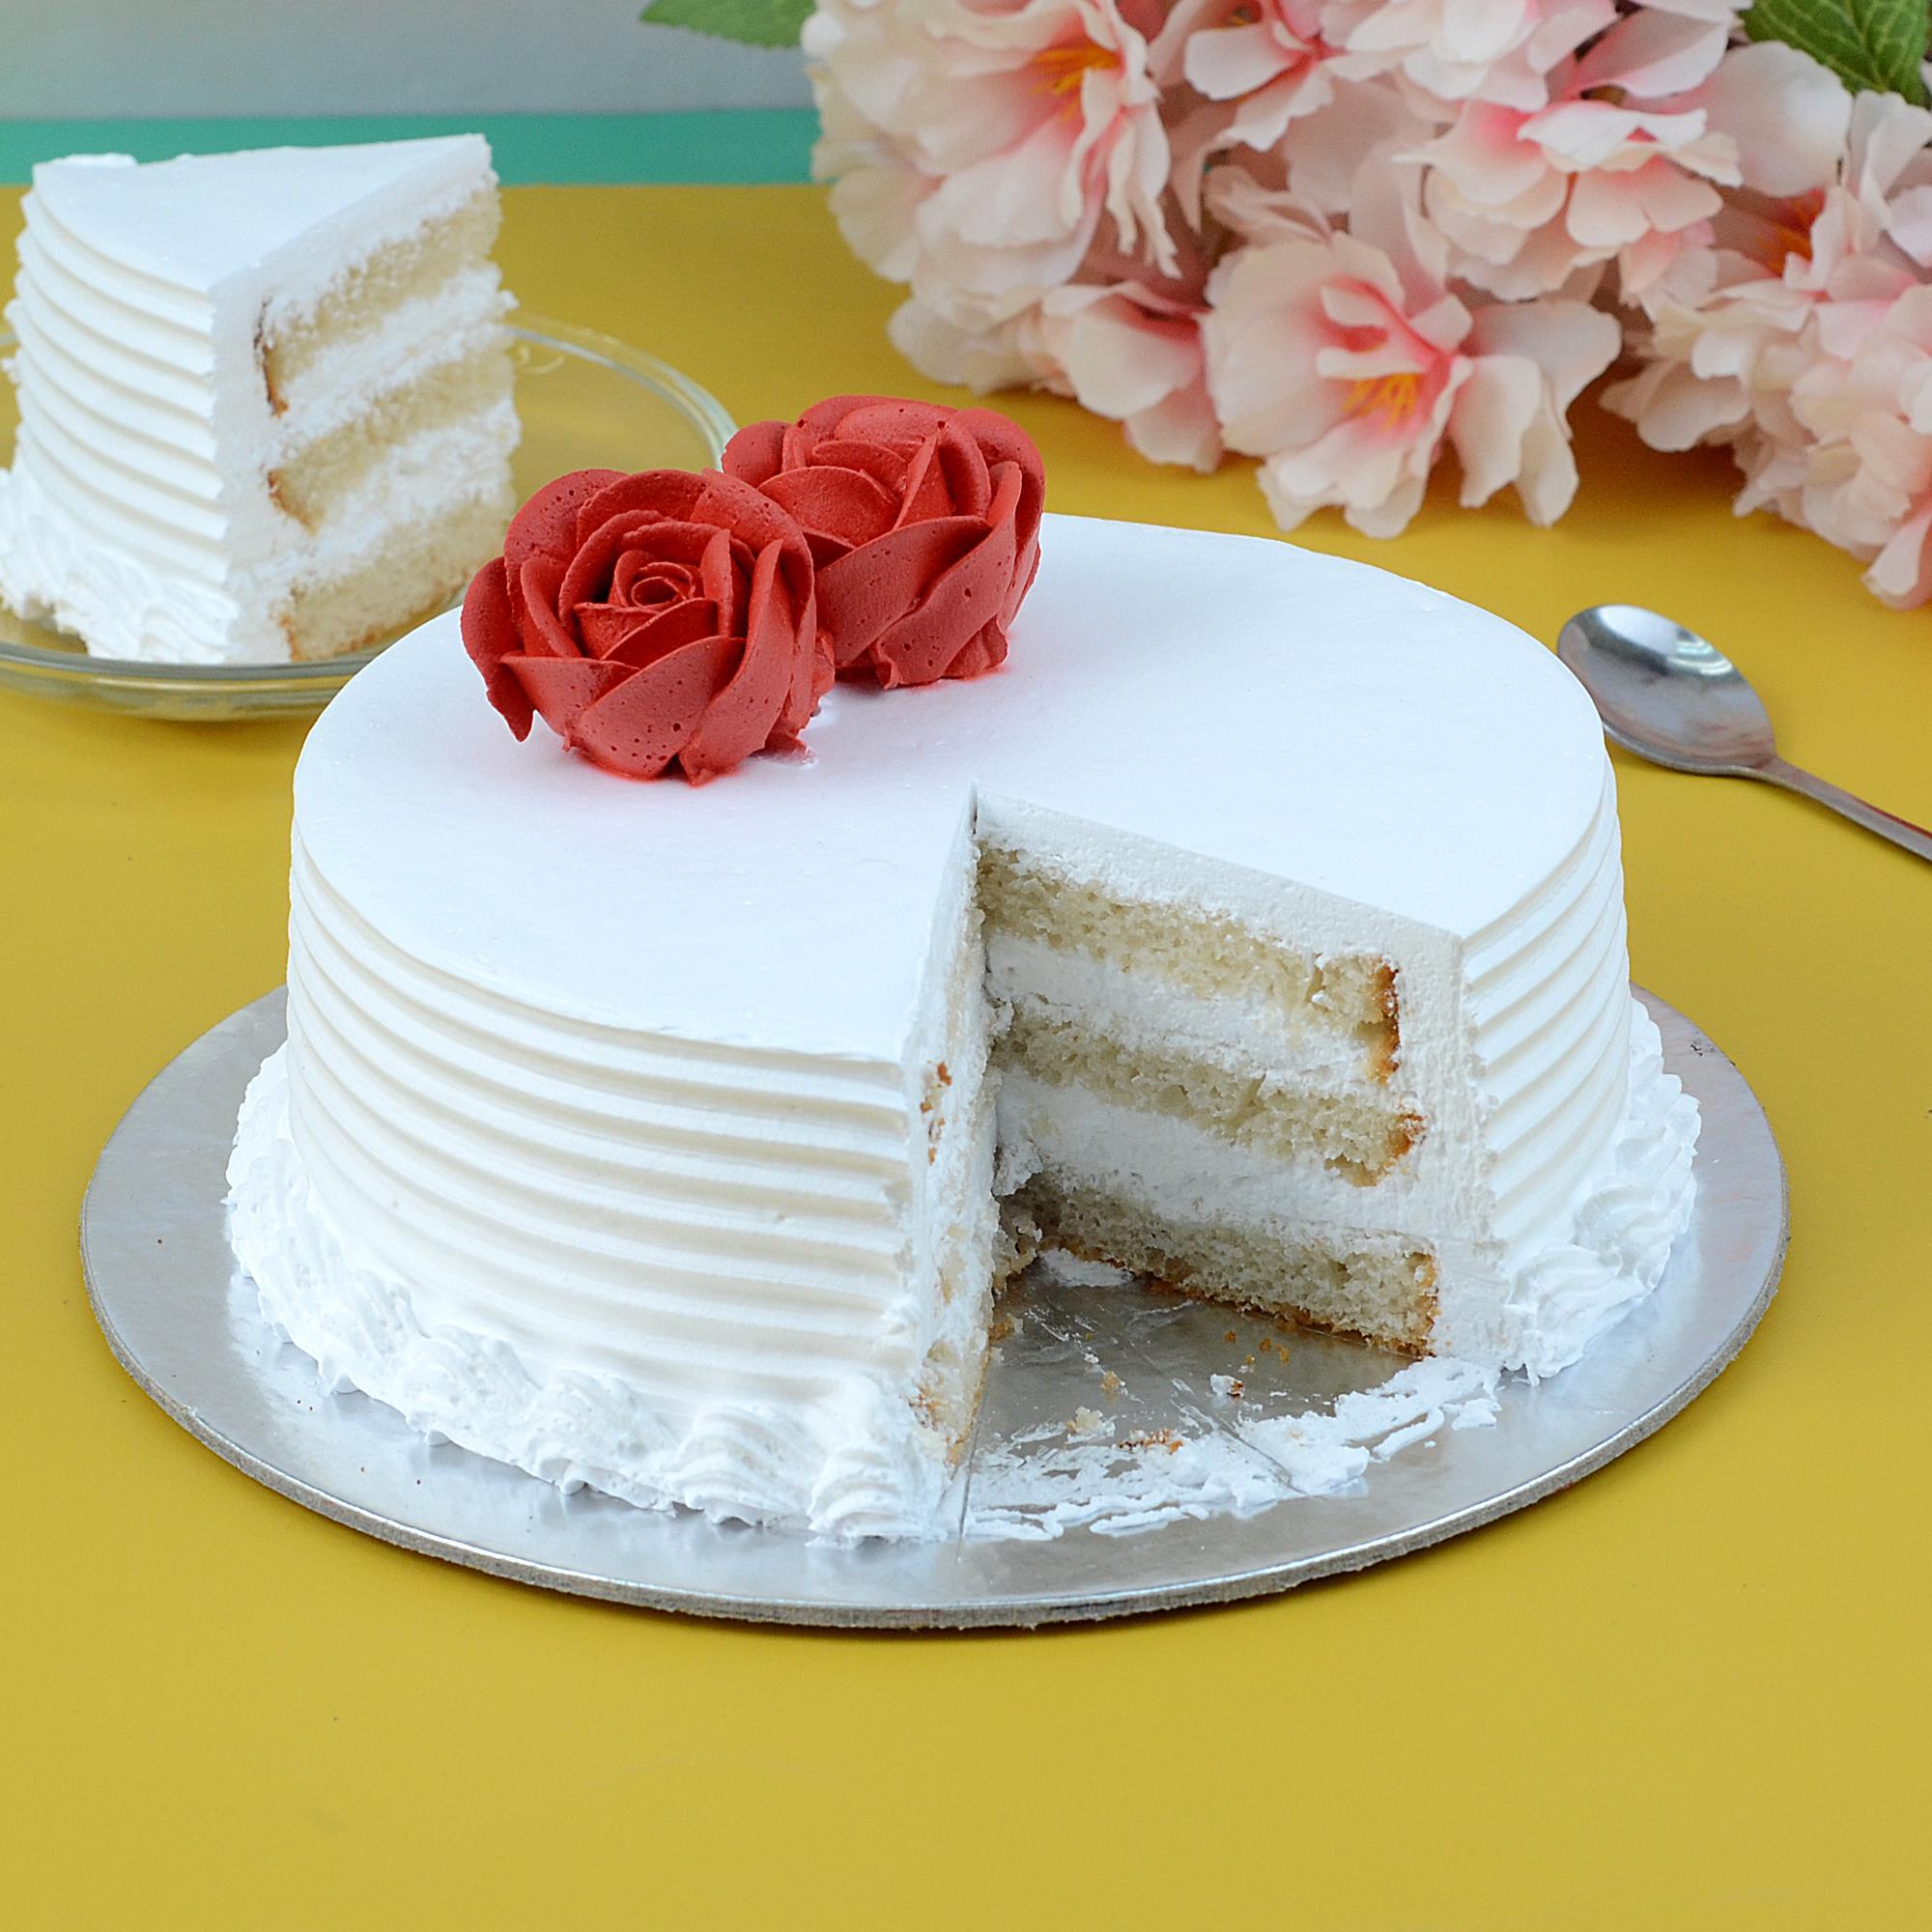 Mr Brown Bakery - Wedding Cake - Chander Nagar, Ghaziabad - Weddingwire.in